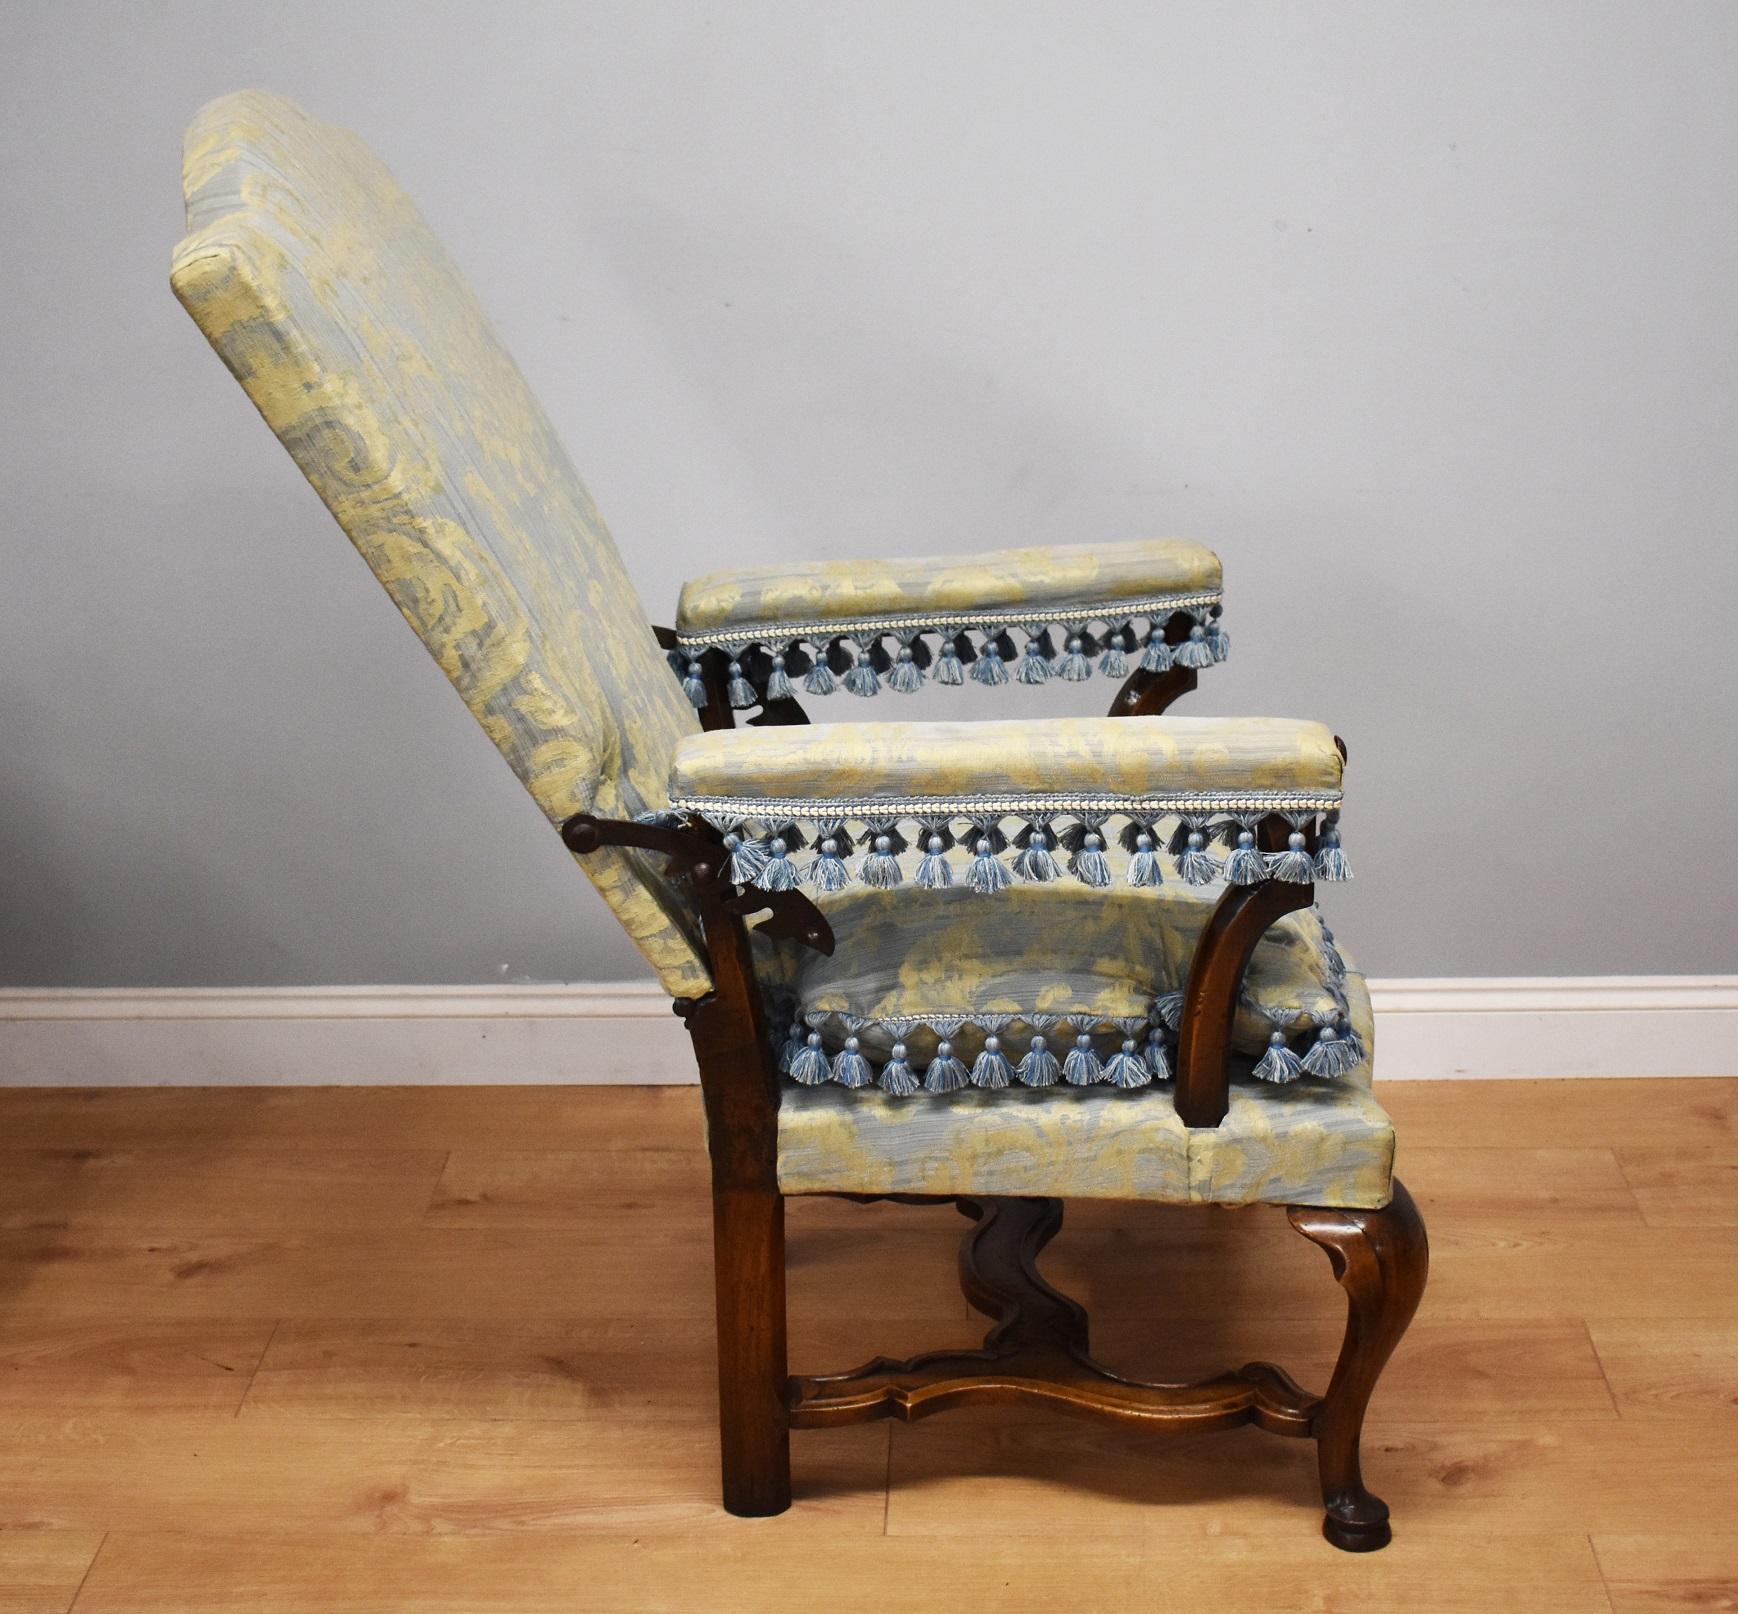 18th Century French Walnut Reclining Chair (18. Jahrhundert)